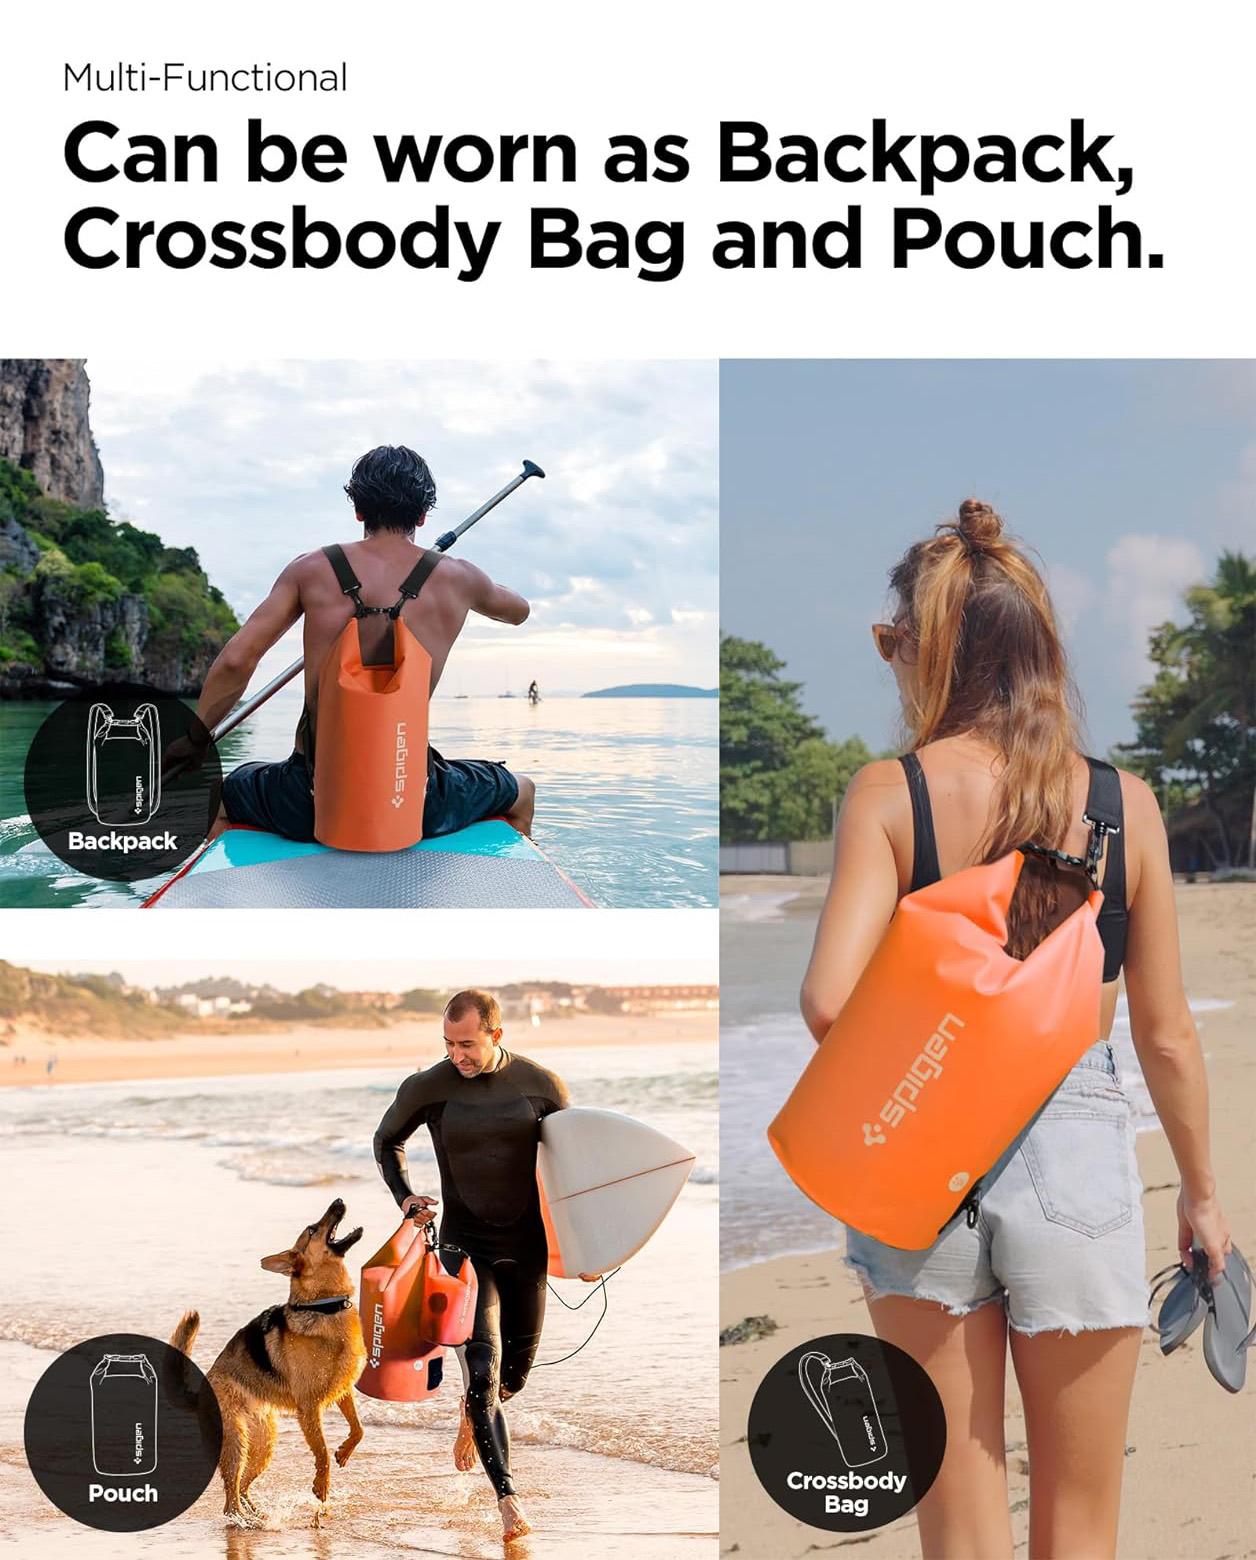 Spigen® AquaShield™ AMP06025 IPX6 Certified Waterproof Bag | 20L+2L – Sunset Orange